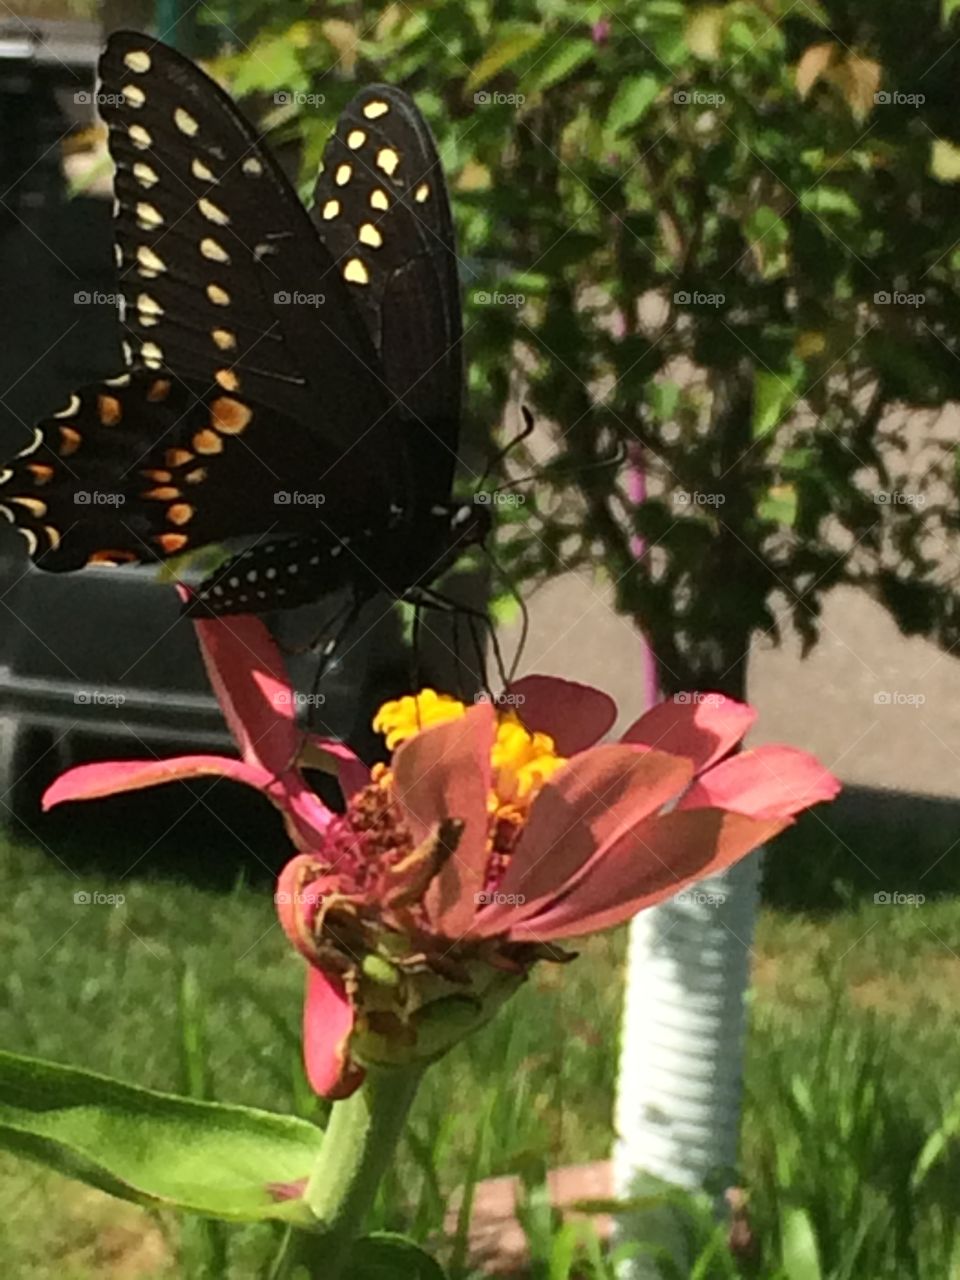 Butterfly on zinnia